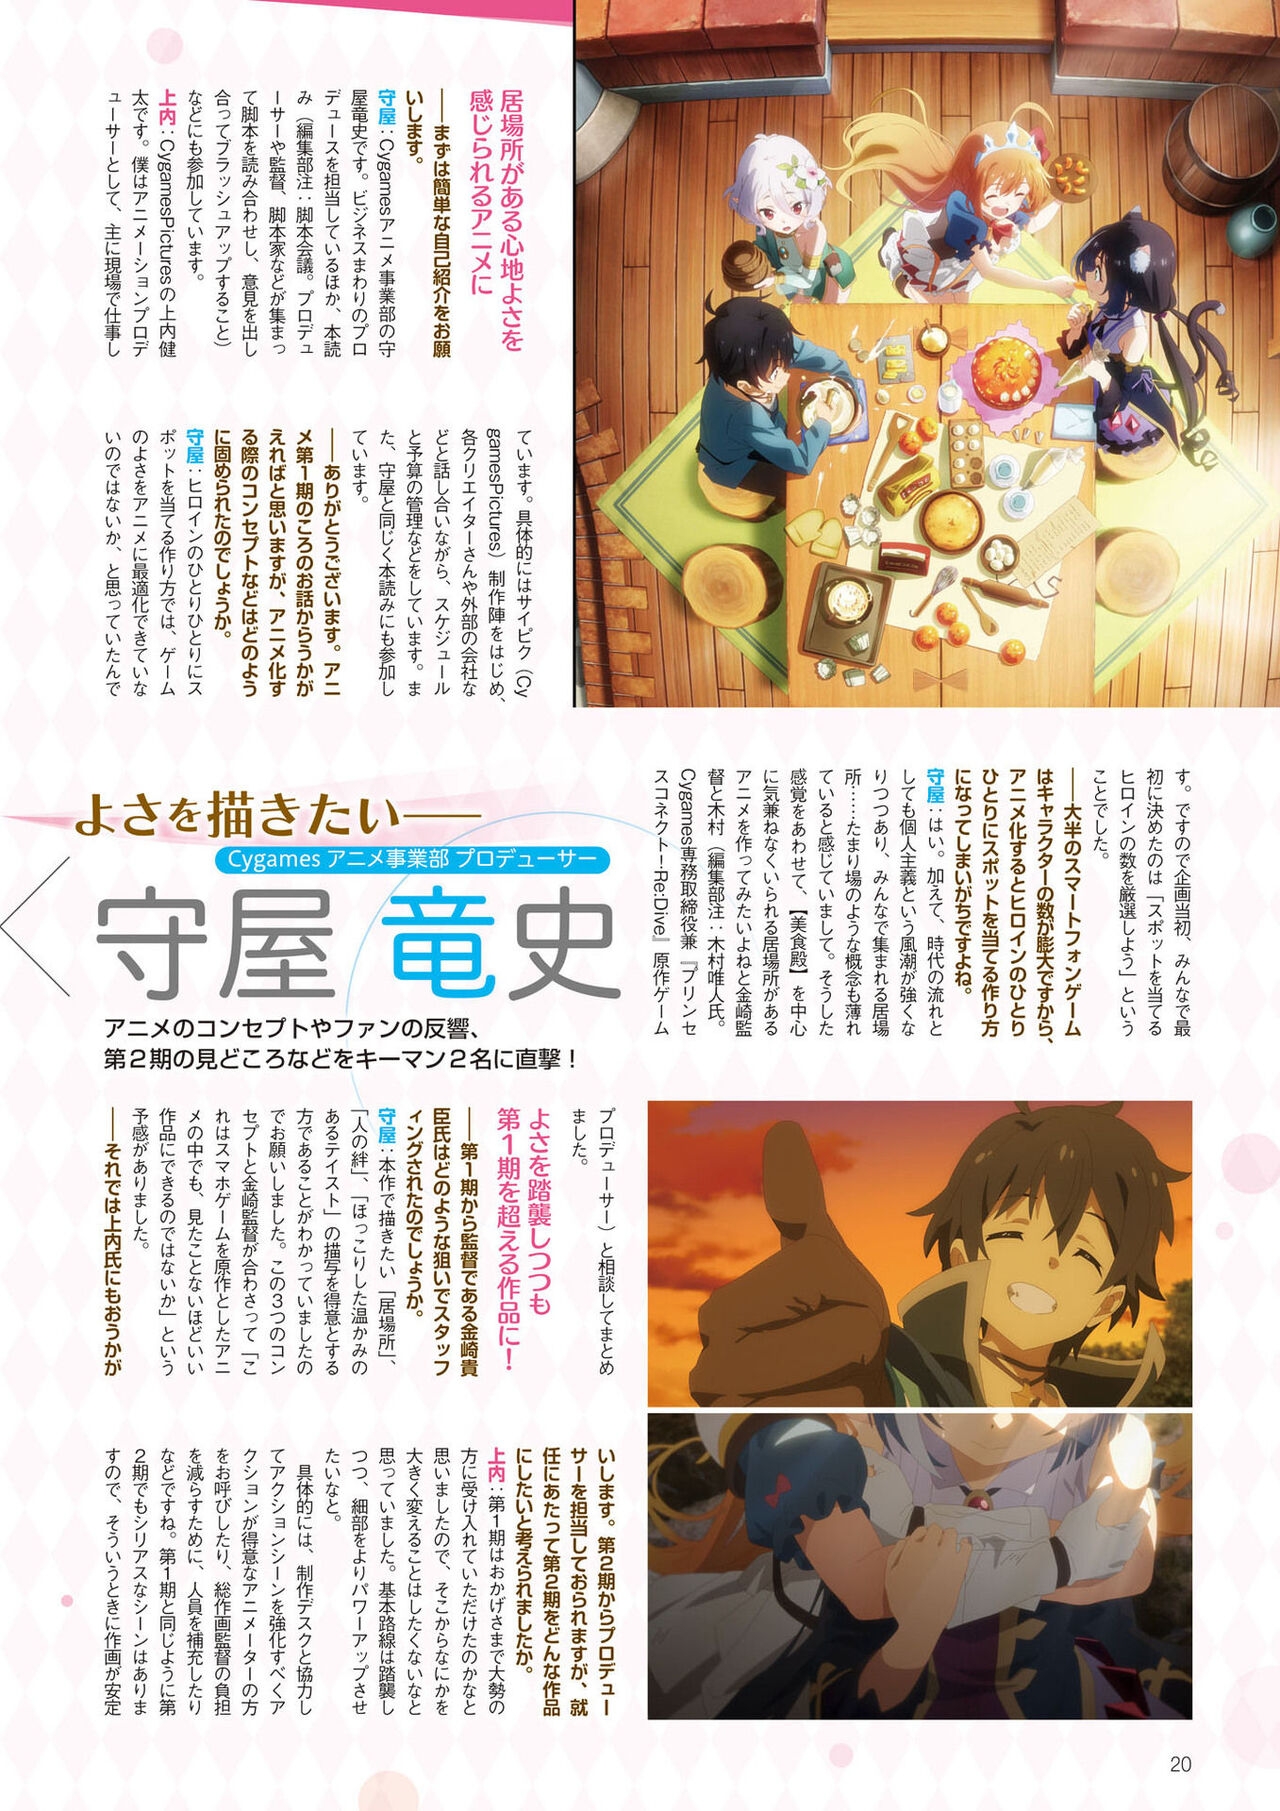 Dengeki G's Magazine #297 - April 2022 17